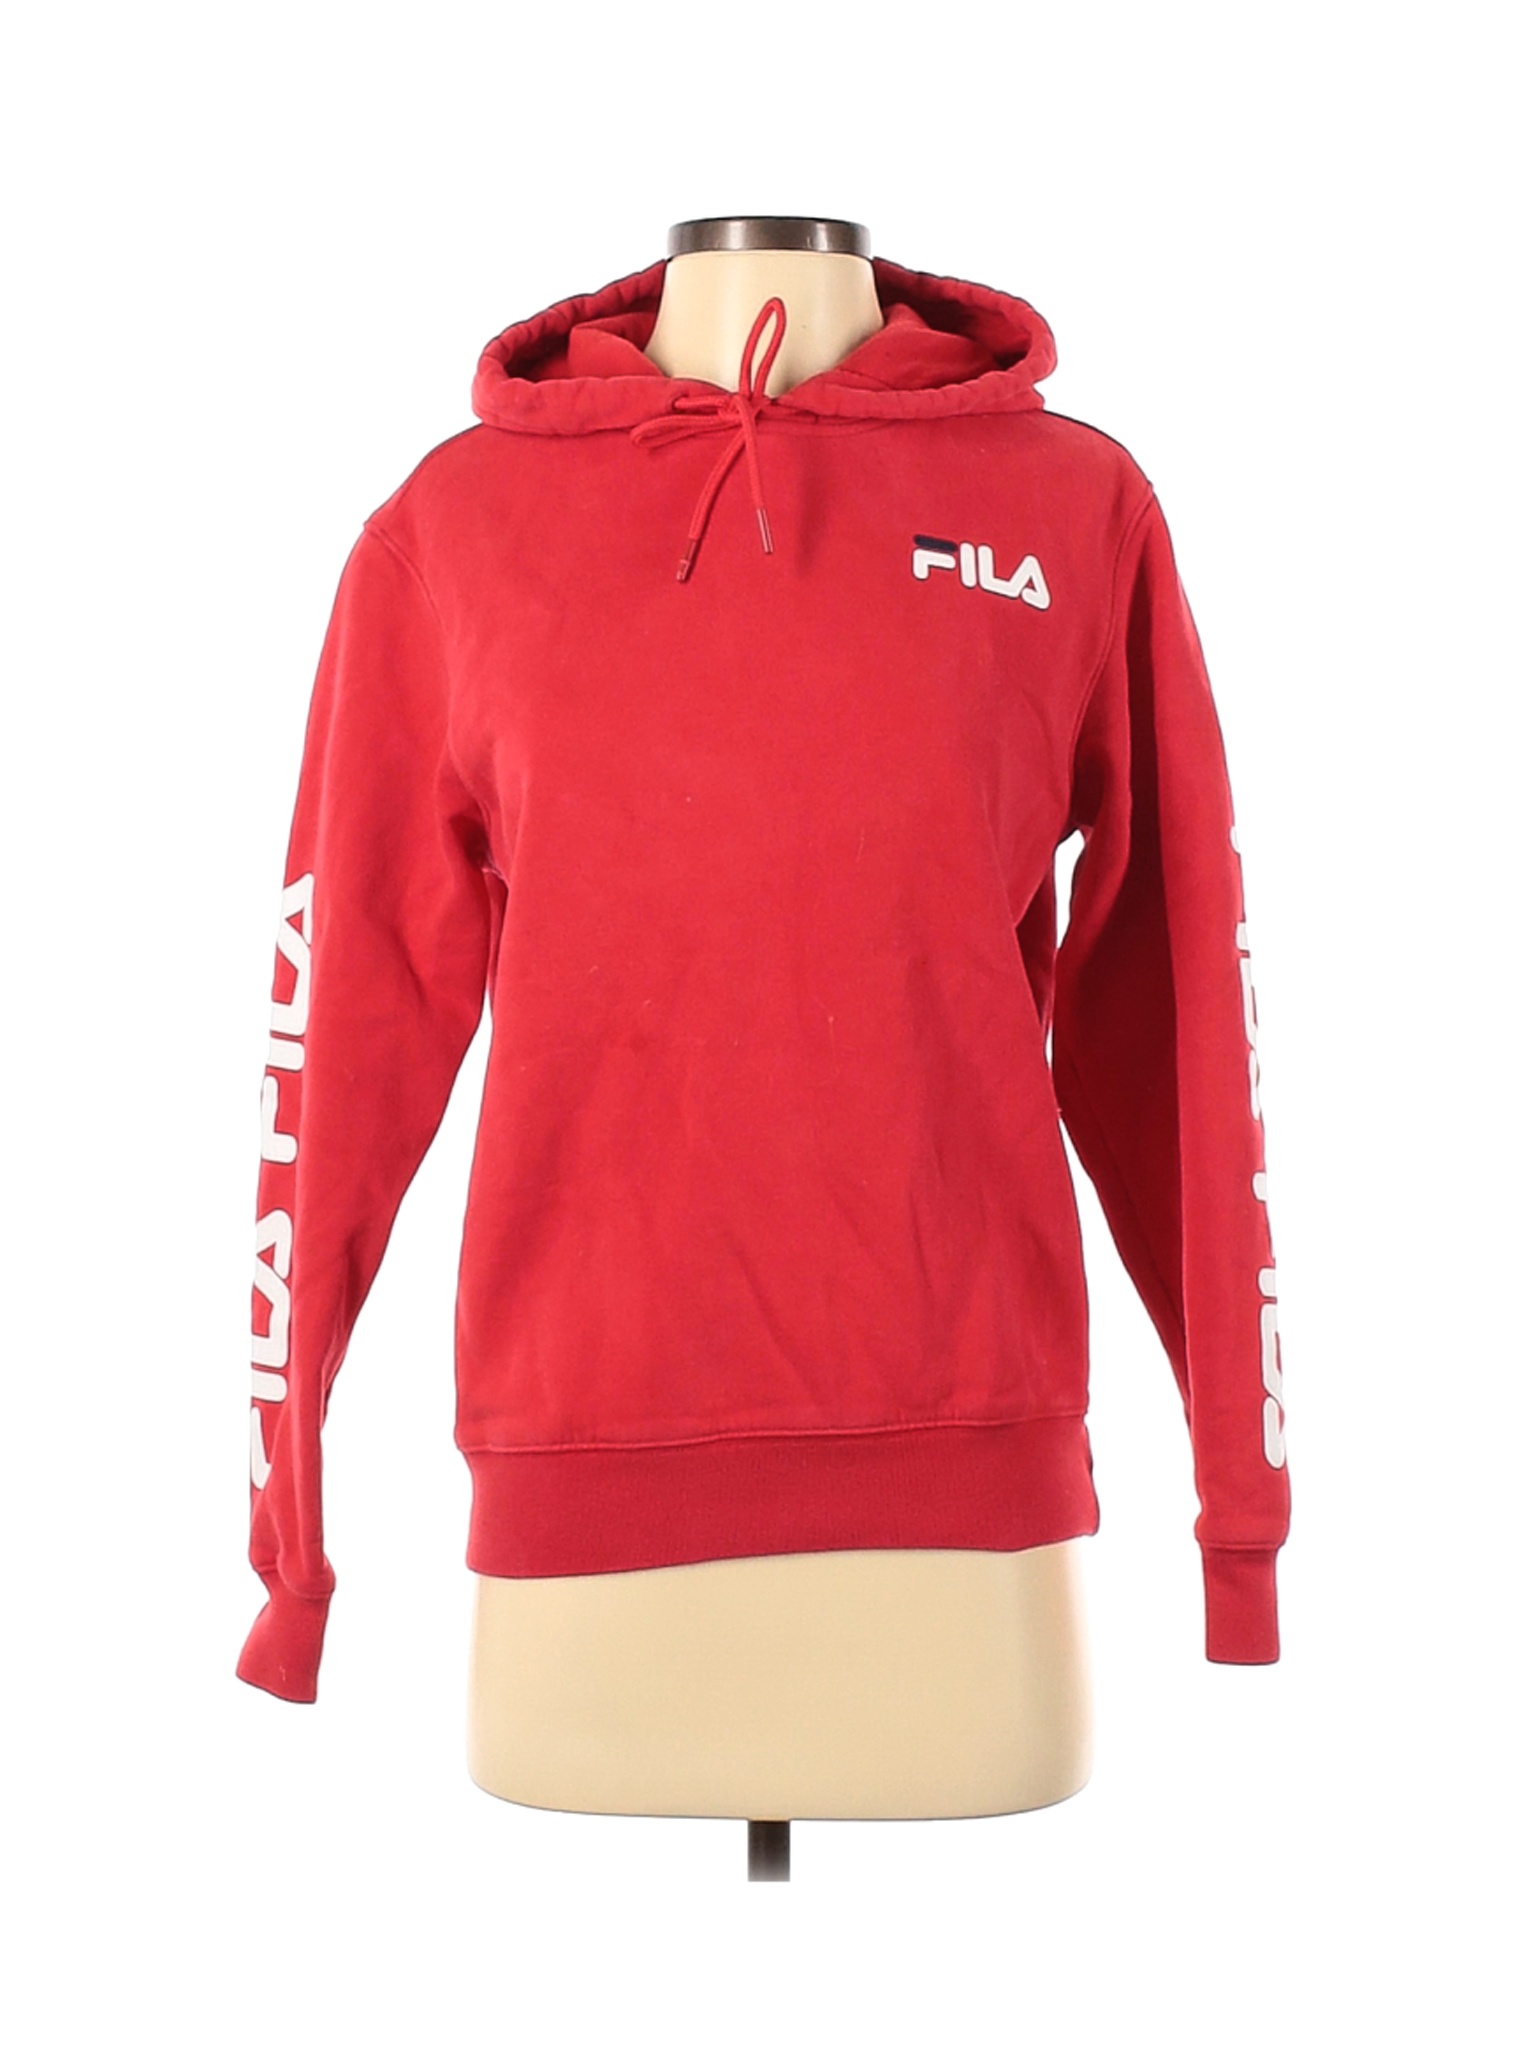 Fila Women Red Pullover Hoodie XS | eBay